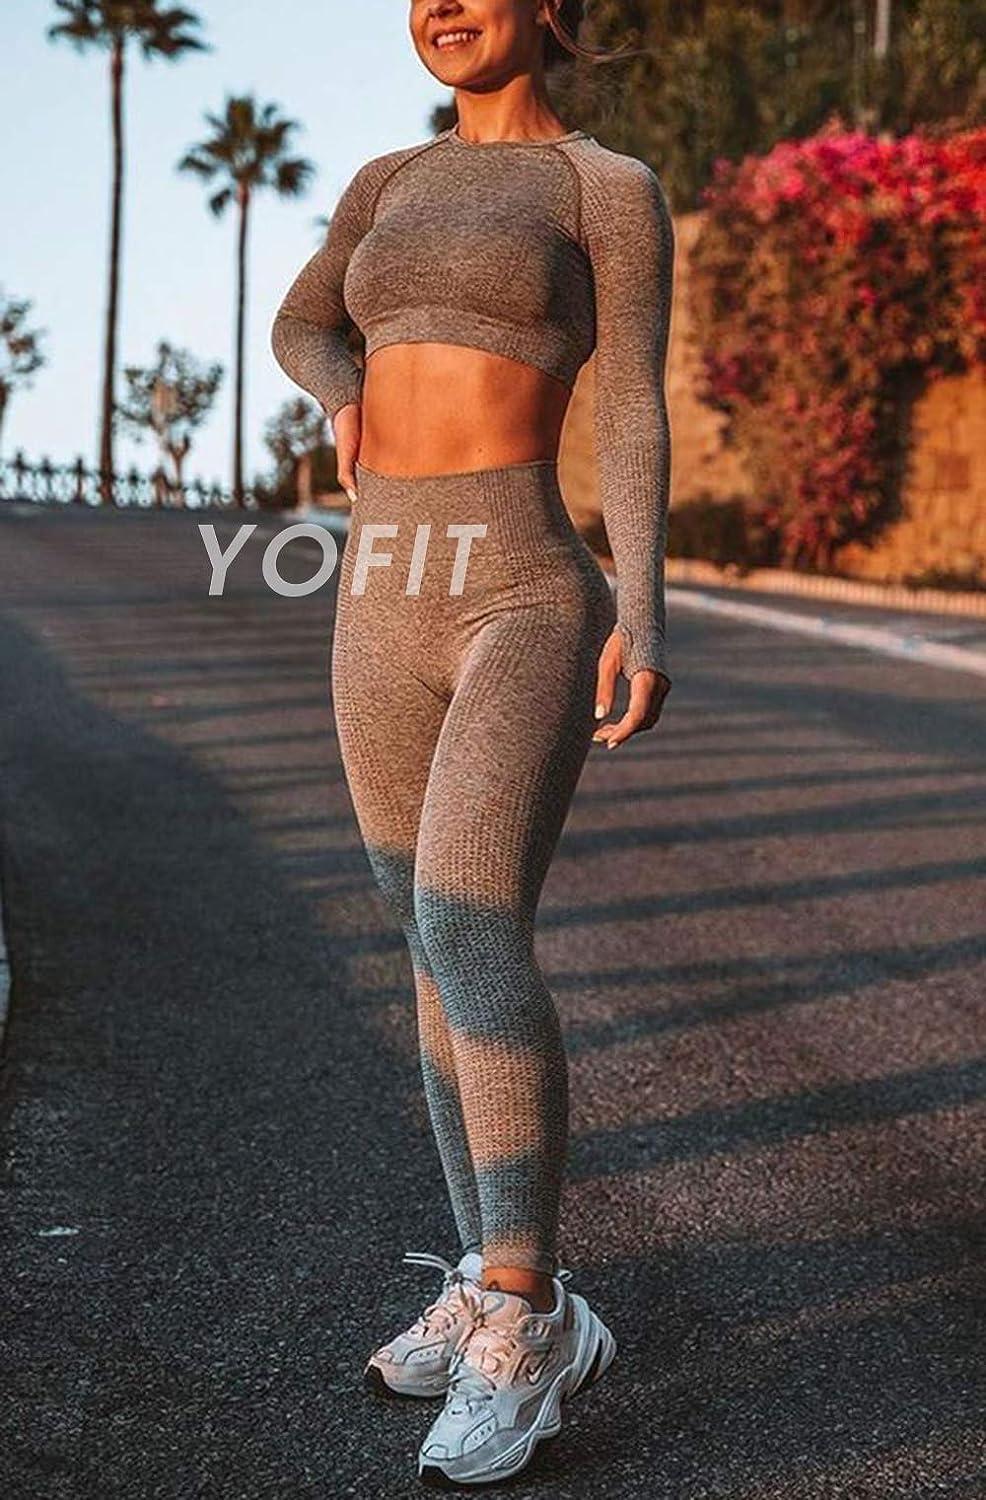 YOFIT Women's Workout Outfit 2 Pieces Seamless High Waist Yoga